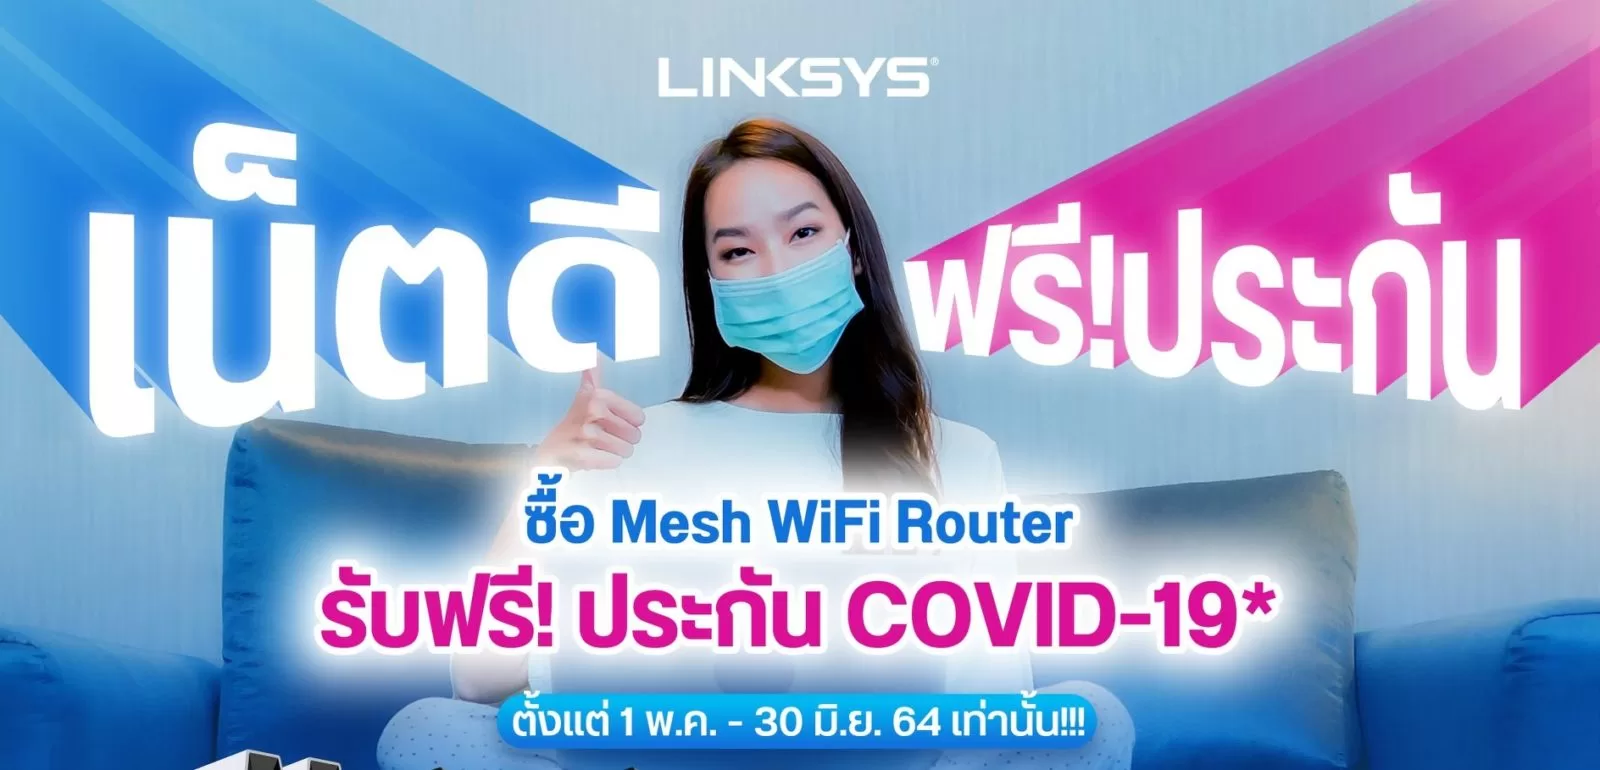 Linksys Promo Covid19 insurance01 1 | Linksys | Linksys ห่วงสุขภาพคนไทย จัดแคมเปญ ซื้อเราเตอร์รับฟรีประกันภัยโควิดคุ้มครอง 1 ปี!! “เน็ตดี ฟรีประกัน”